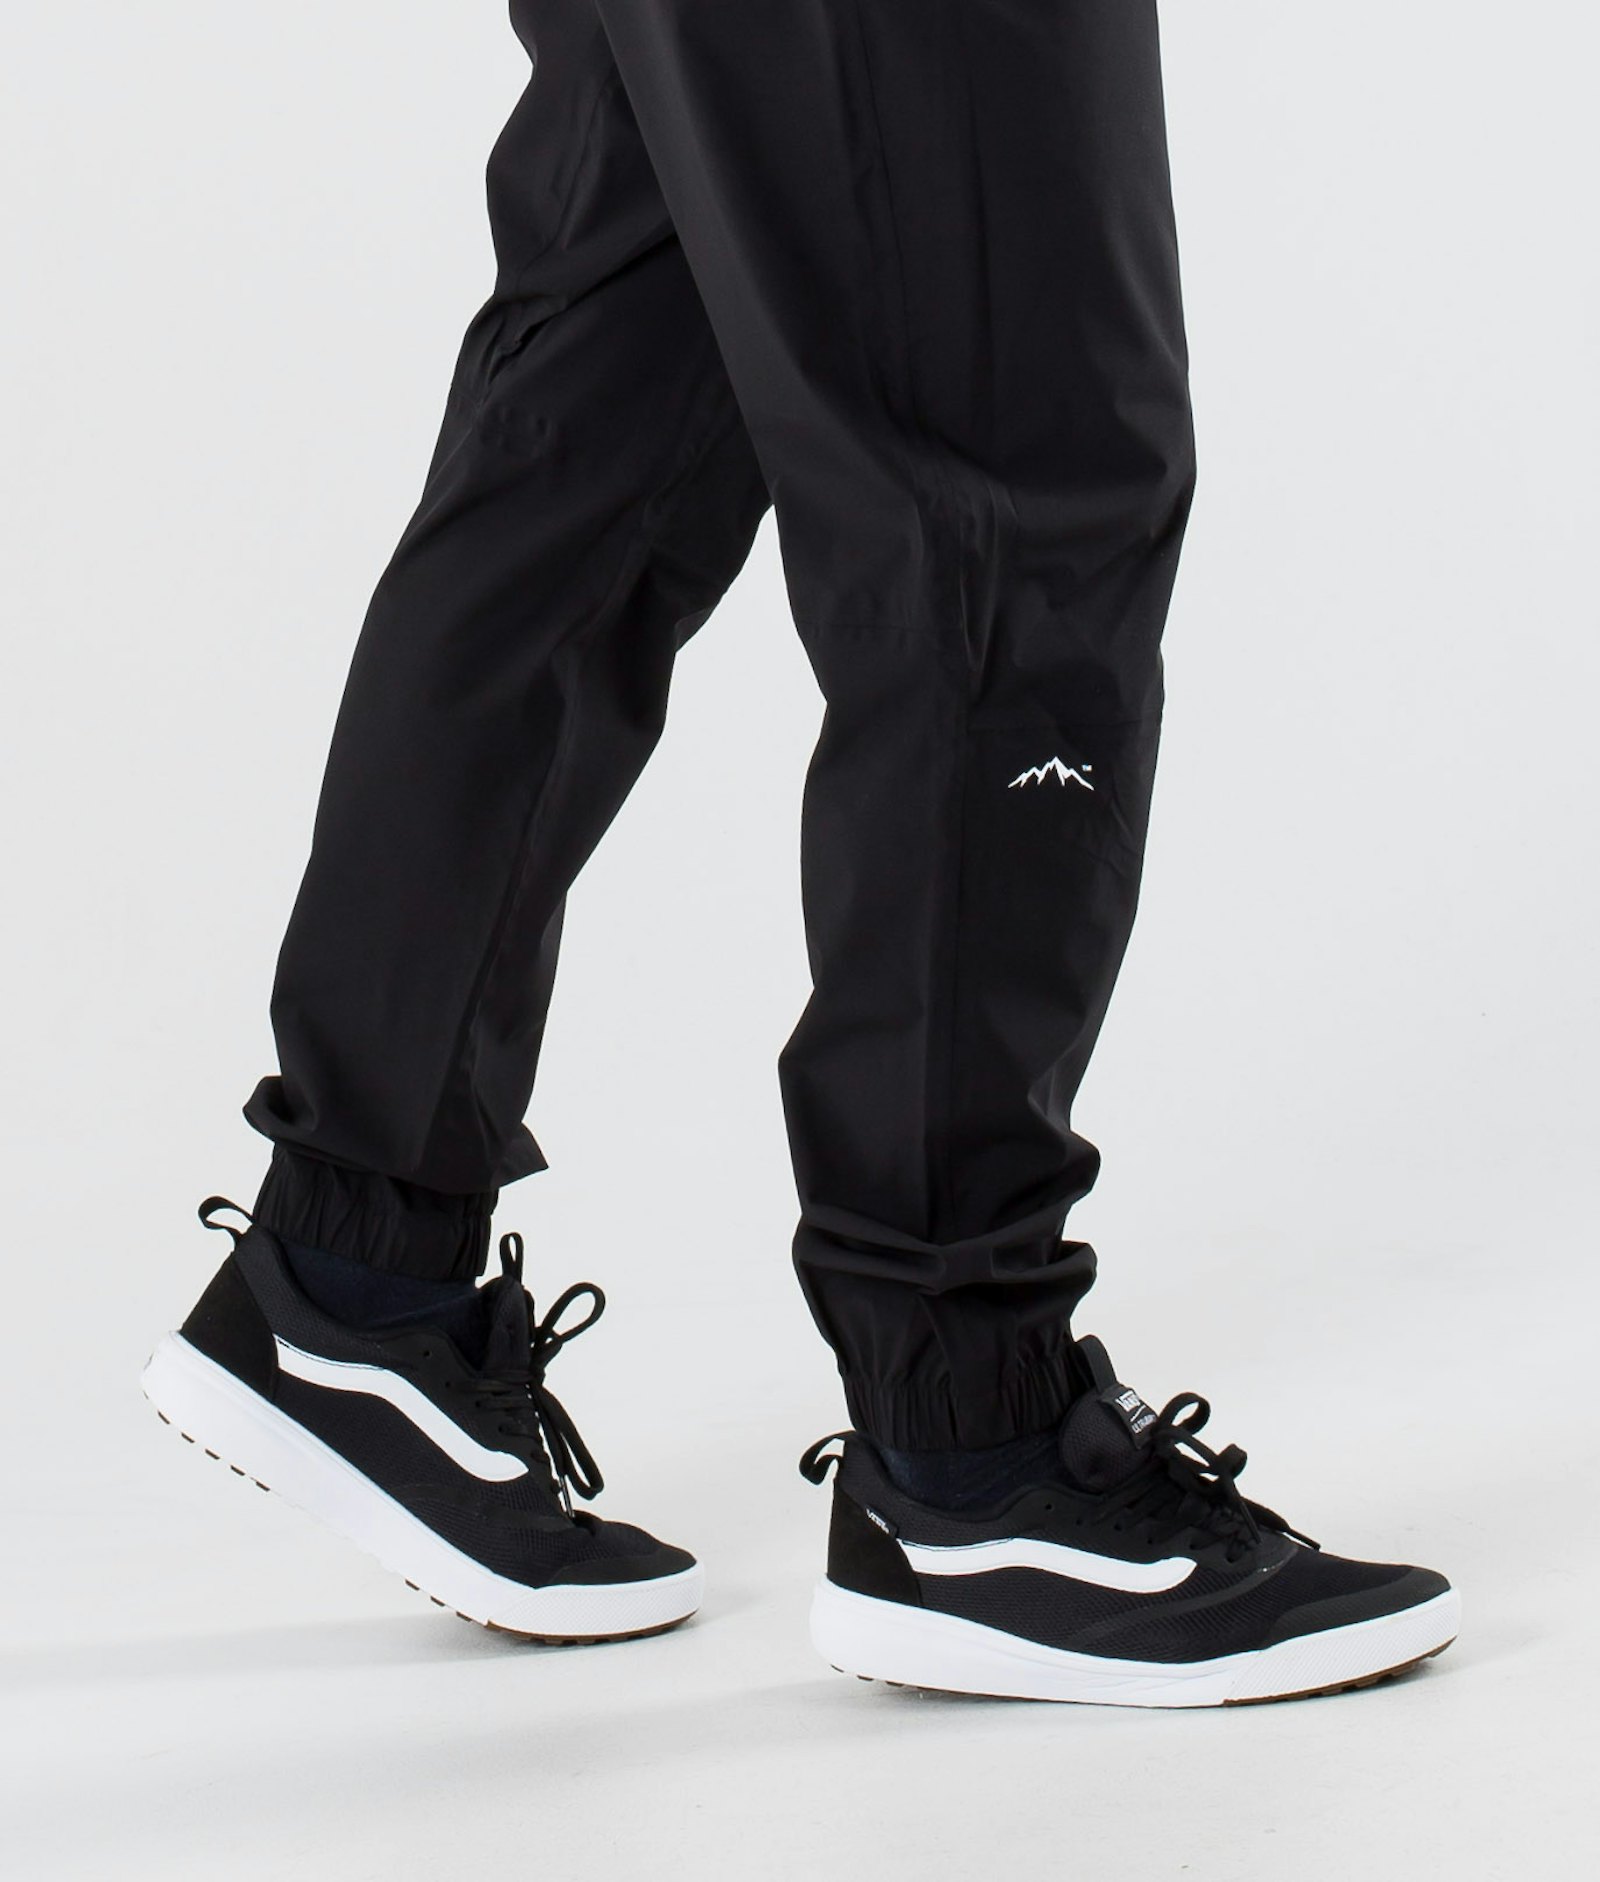 Dope Drizzard 2020 Pantaloni Antipioggia Uomo Black